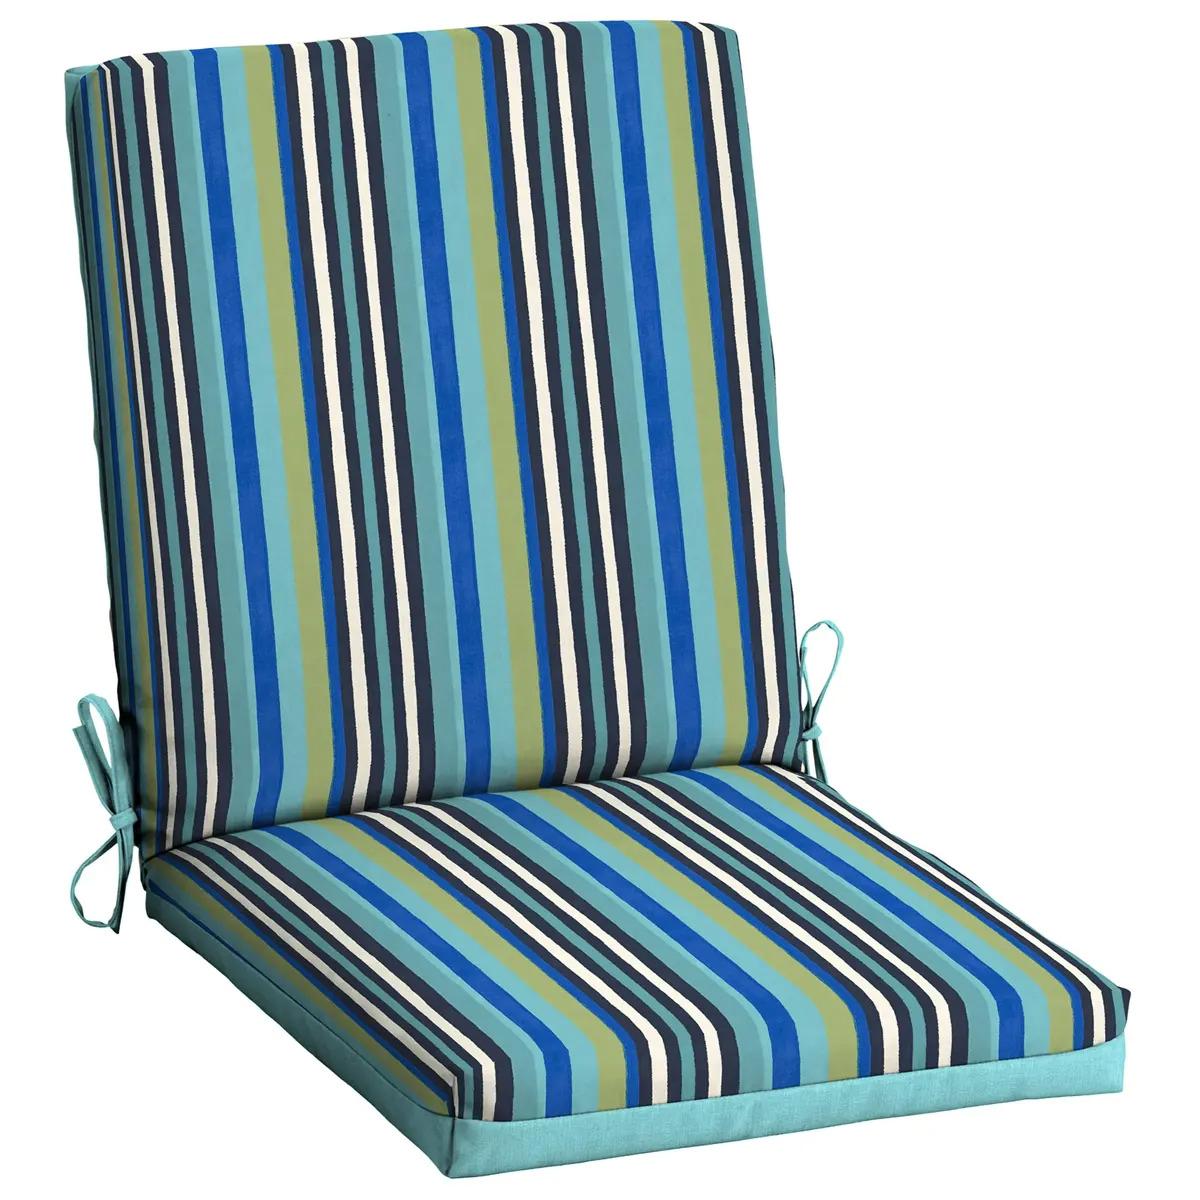 Mainstays Rectangle Patio Chair Cushion for $14.97